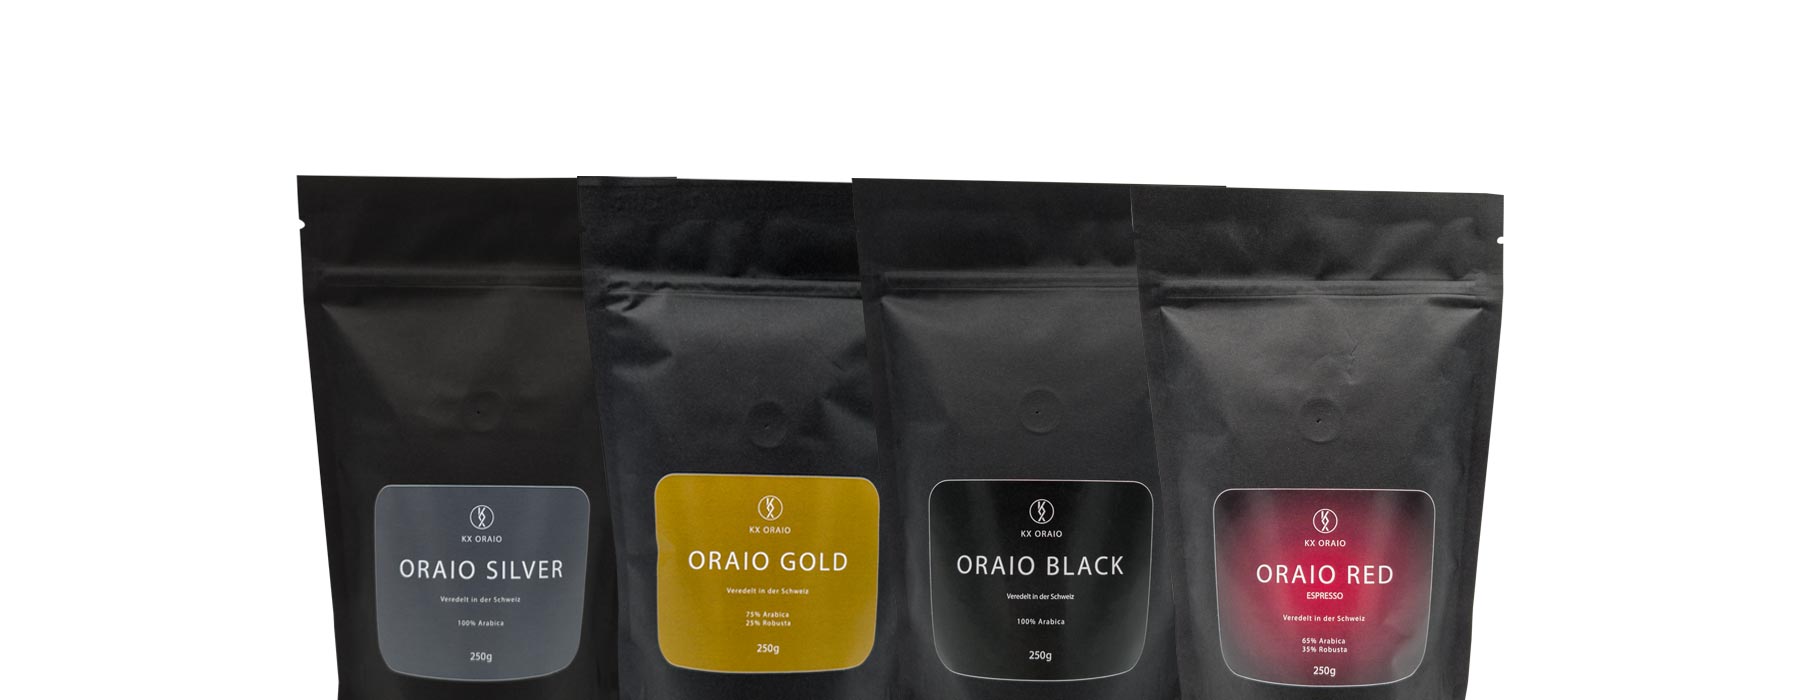 ORAIO coffee selection